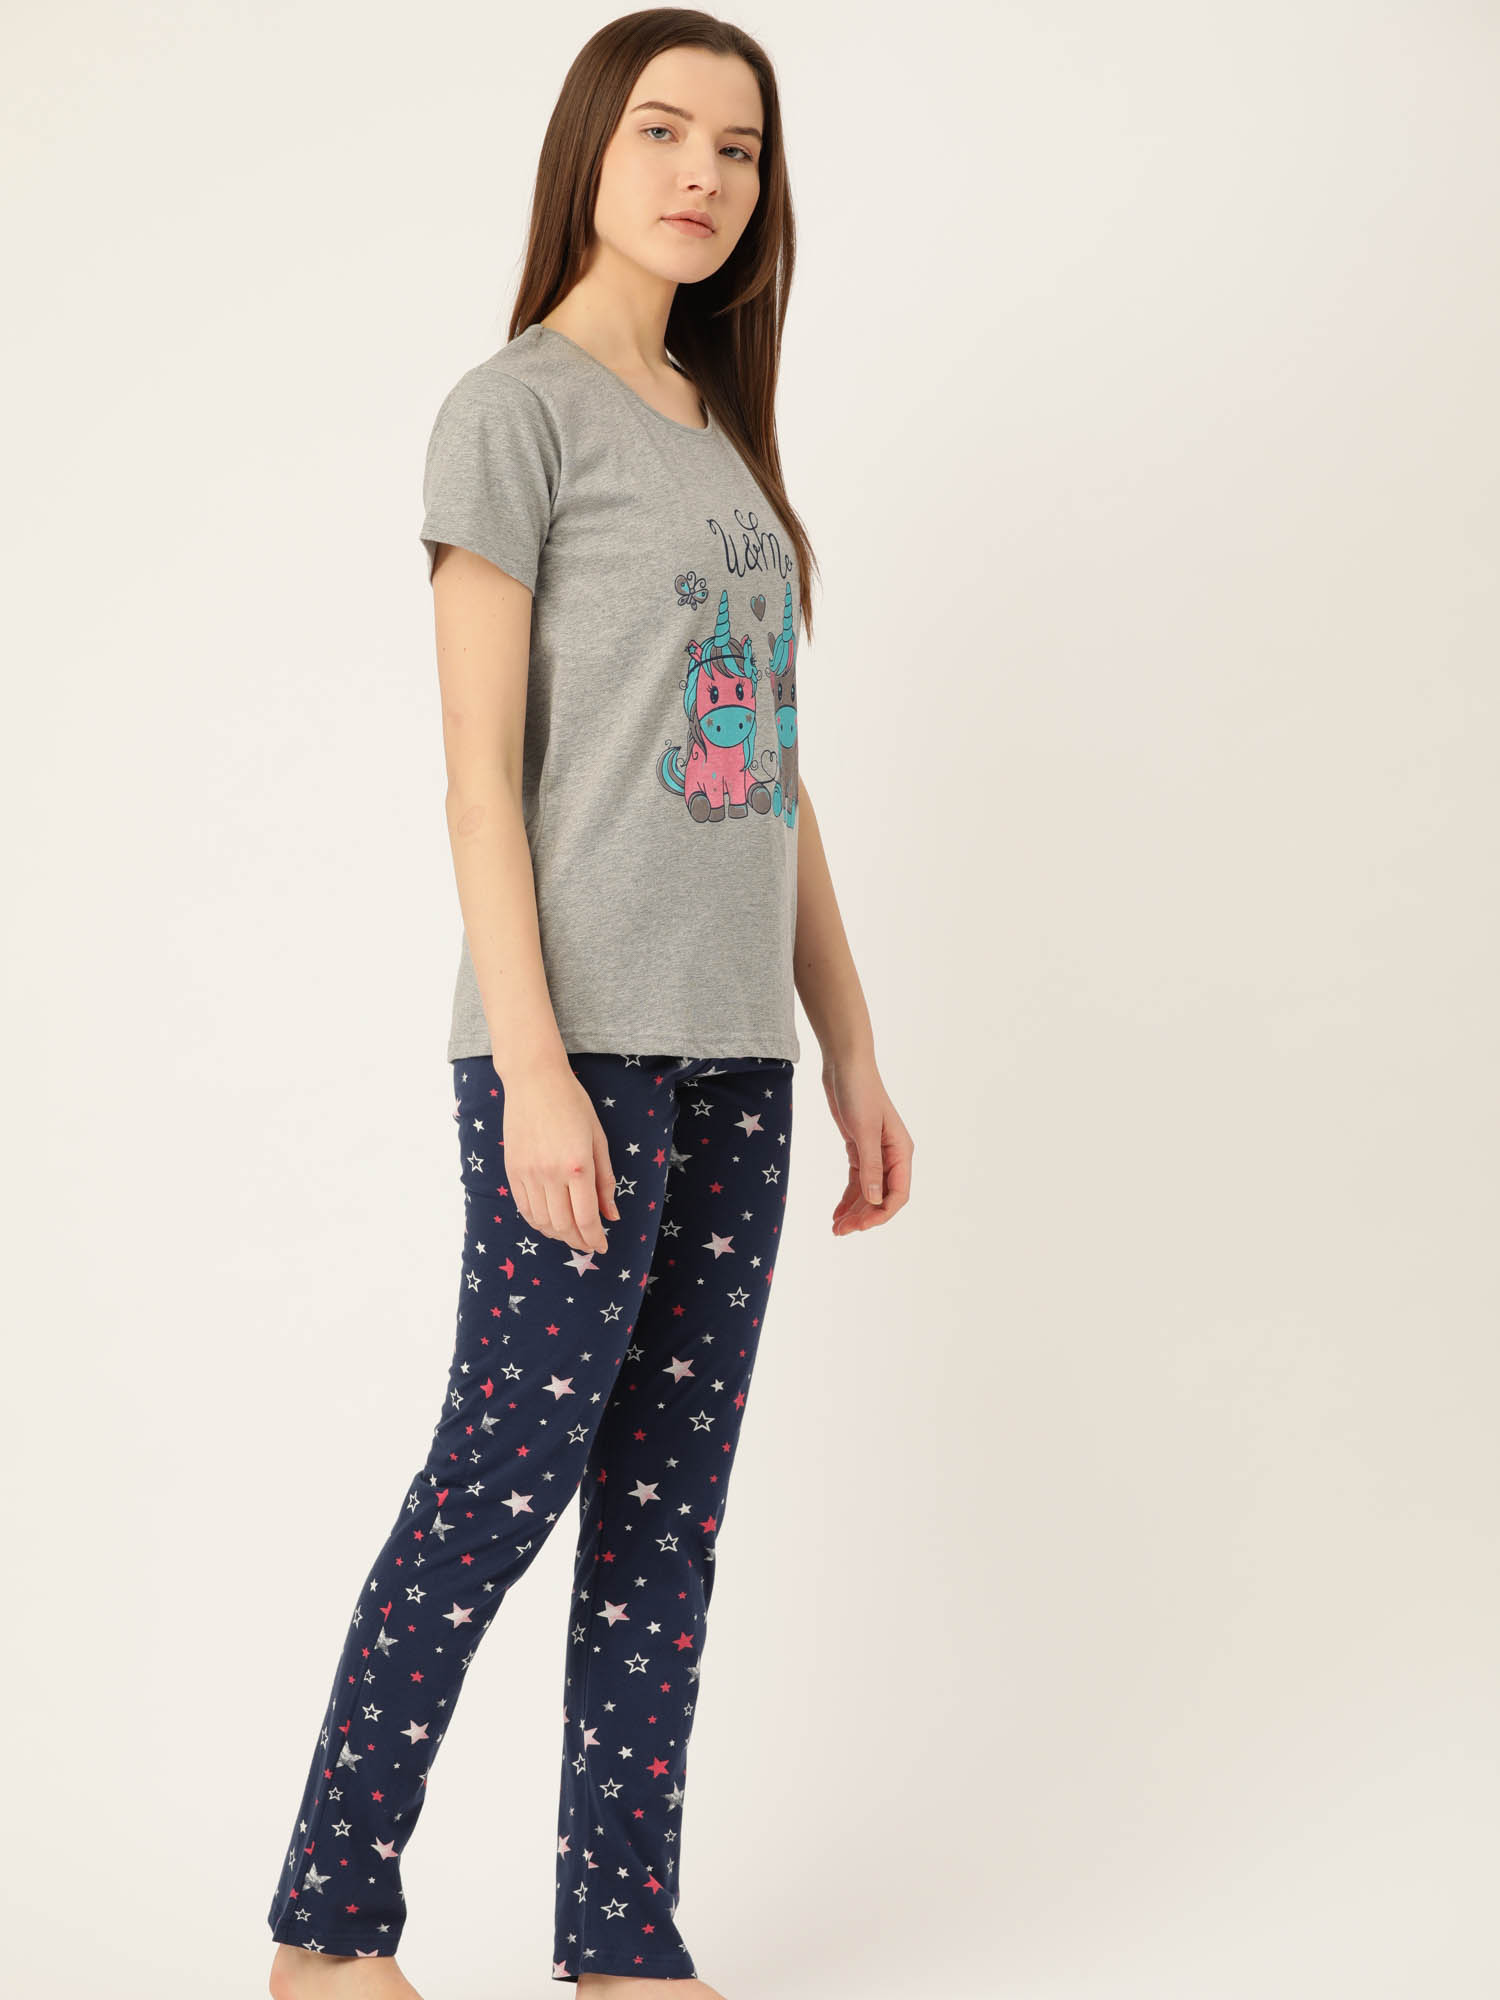 Buy MAYSIXTY Cotton Printed Front Open Pyjama Set for Women | Night Suit Set  | Half Sleeve (Pink Melange) at Amazon.in